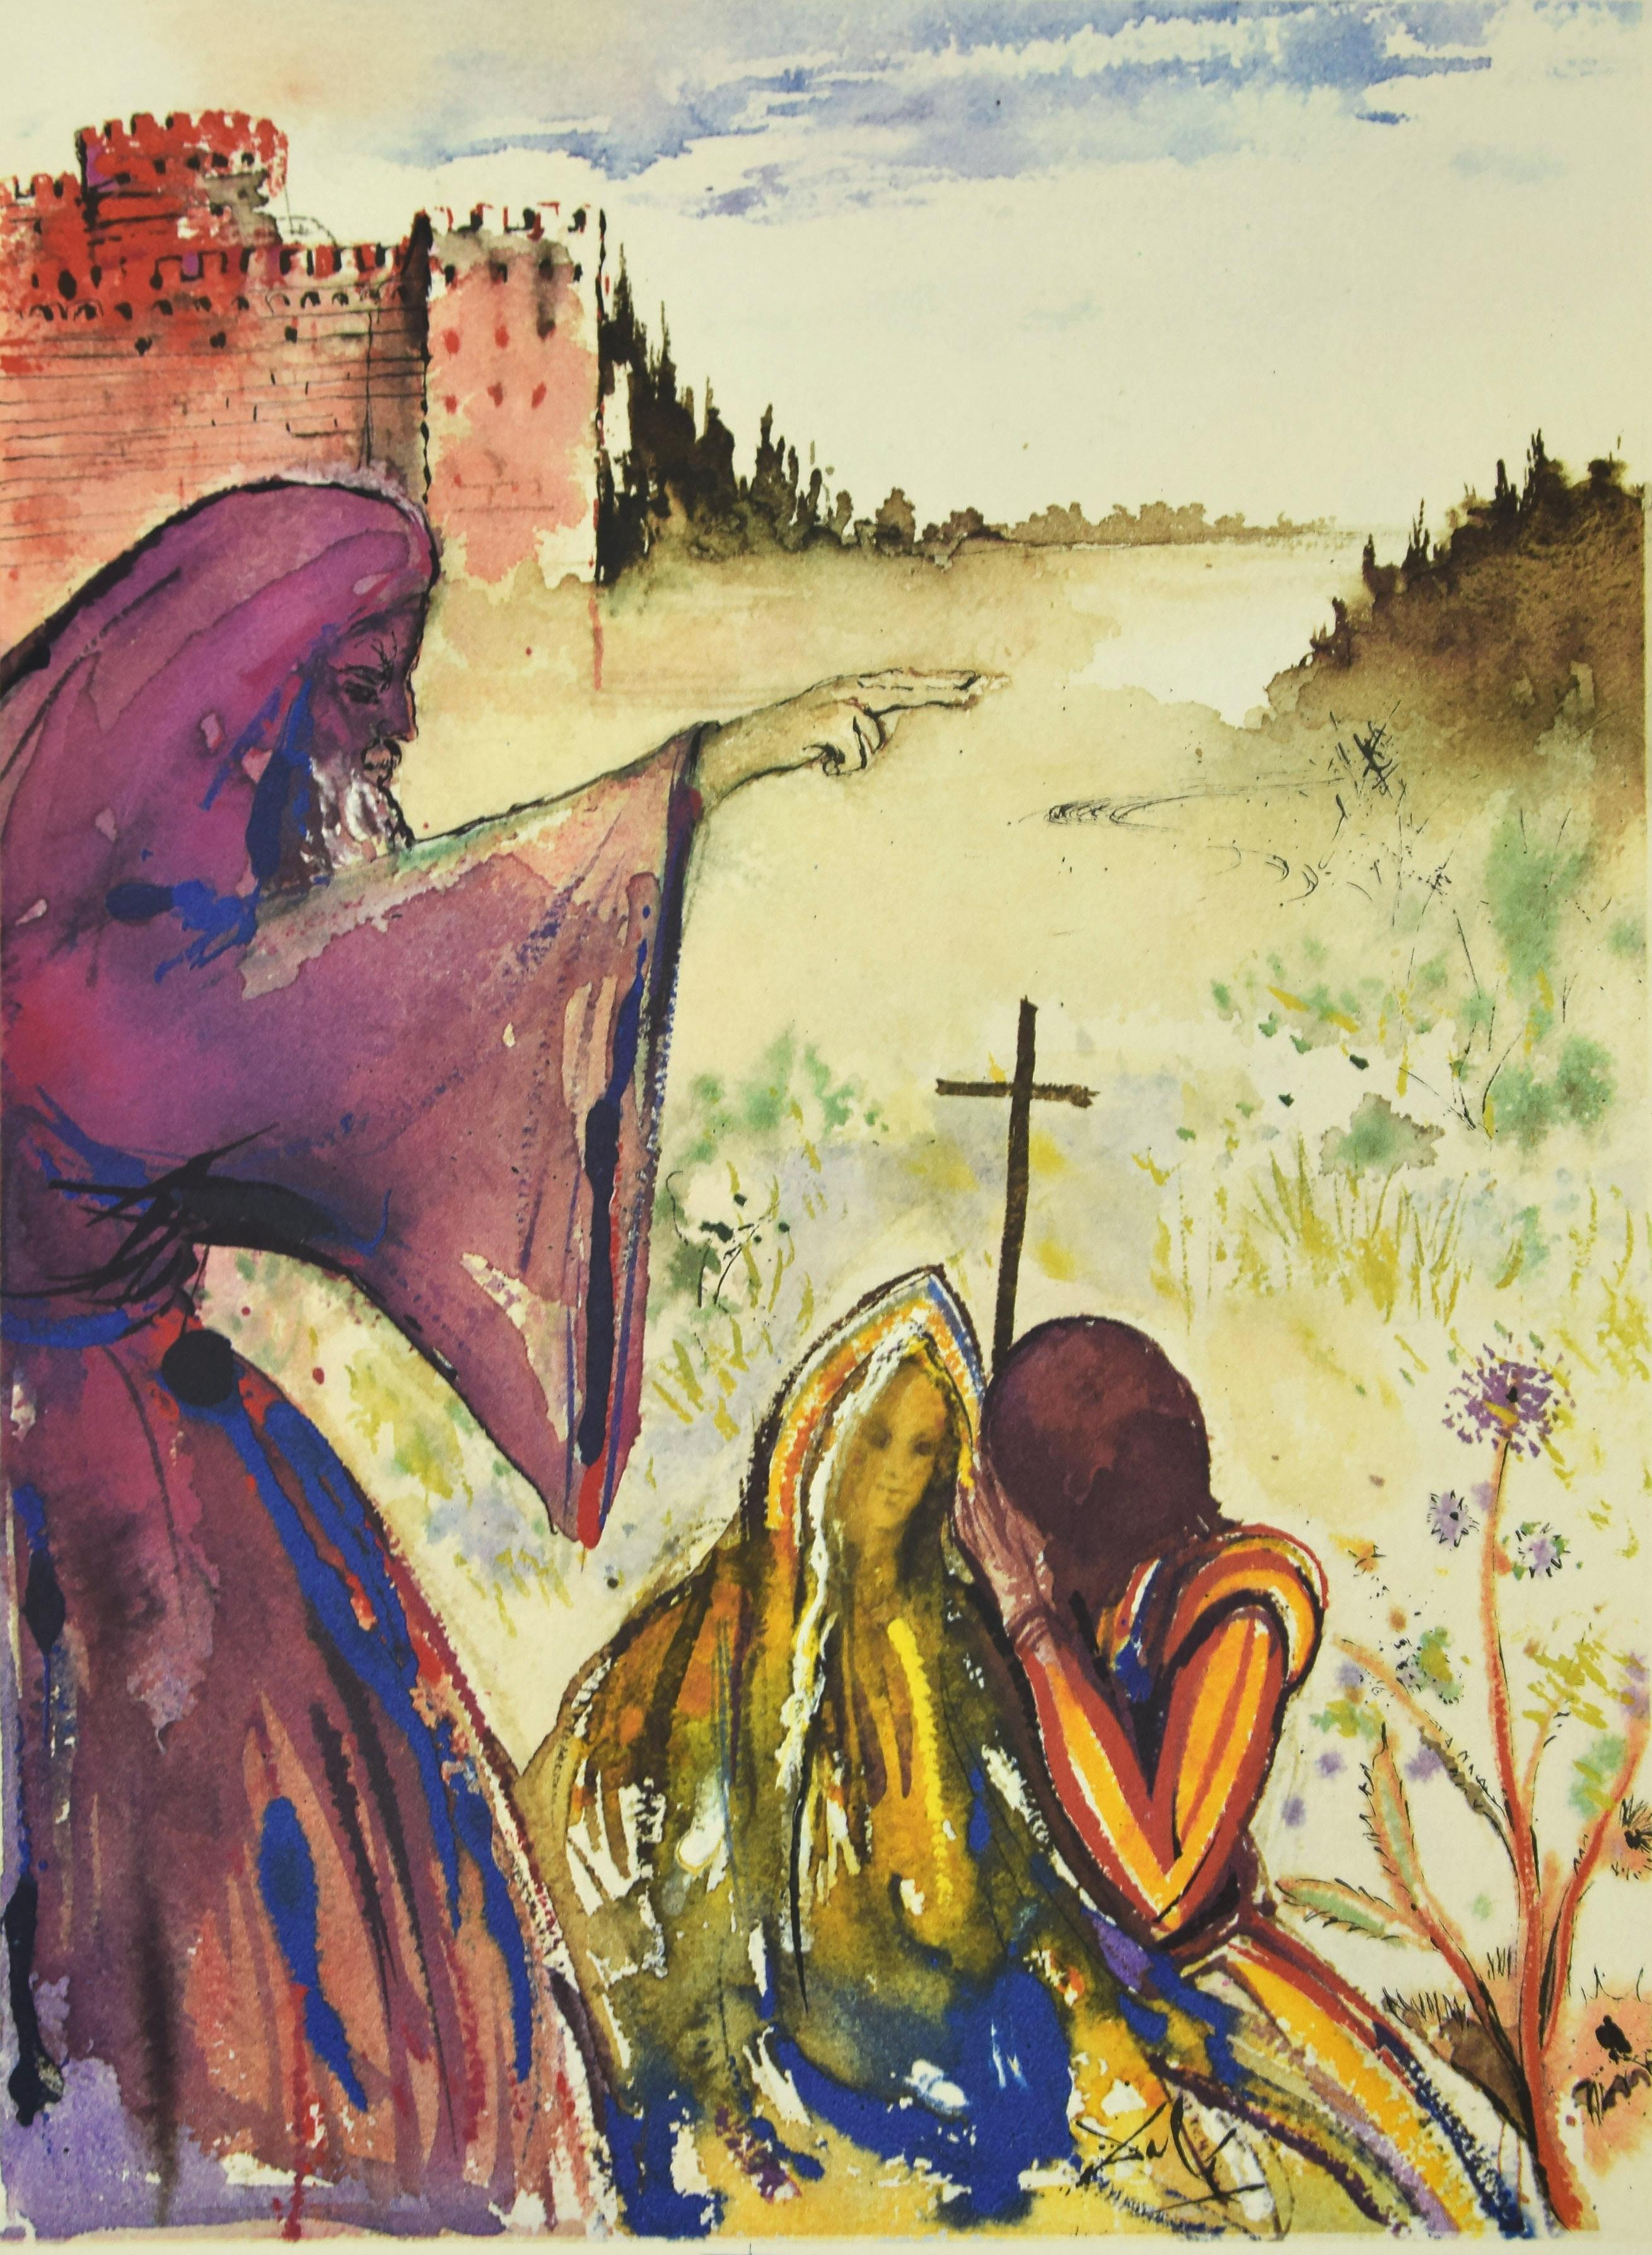 Salvador Dalí Print - Romeo and Juliet Act 2, Scene 6 - Original Lithograph by Salvador Dalì - 1975